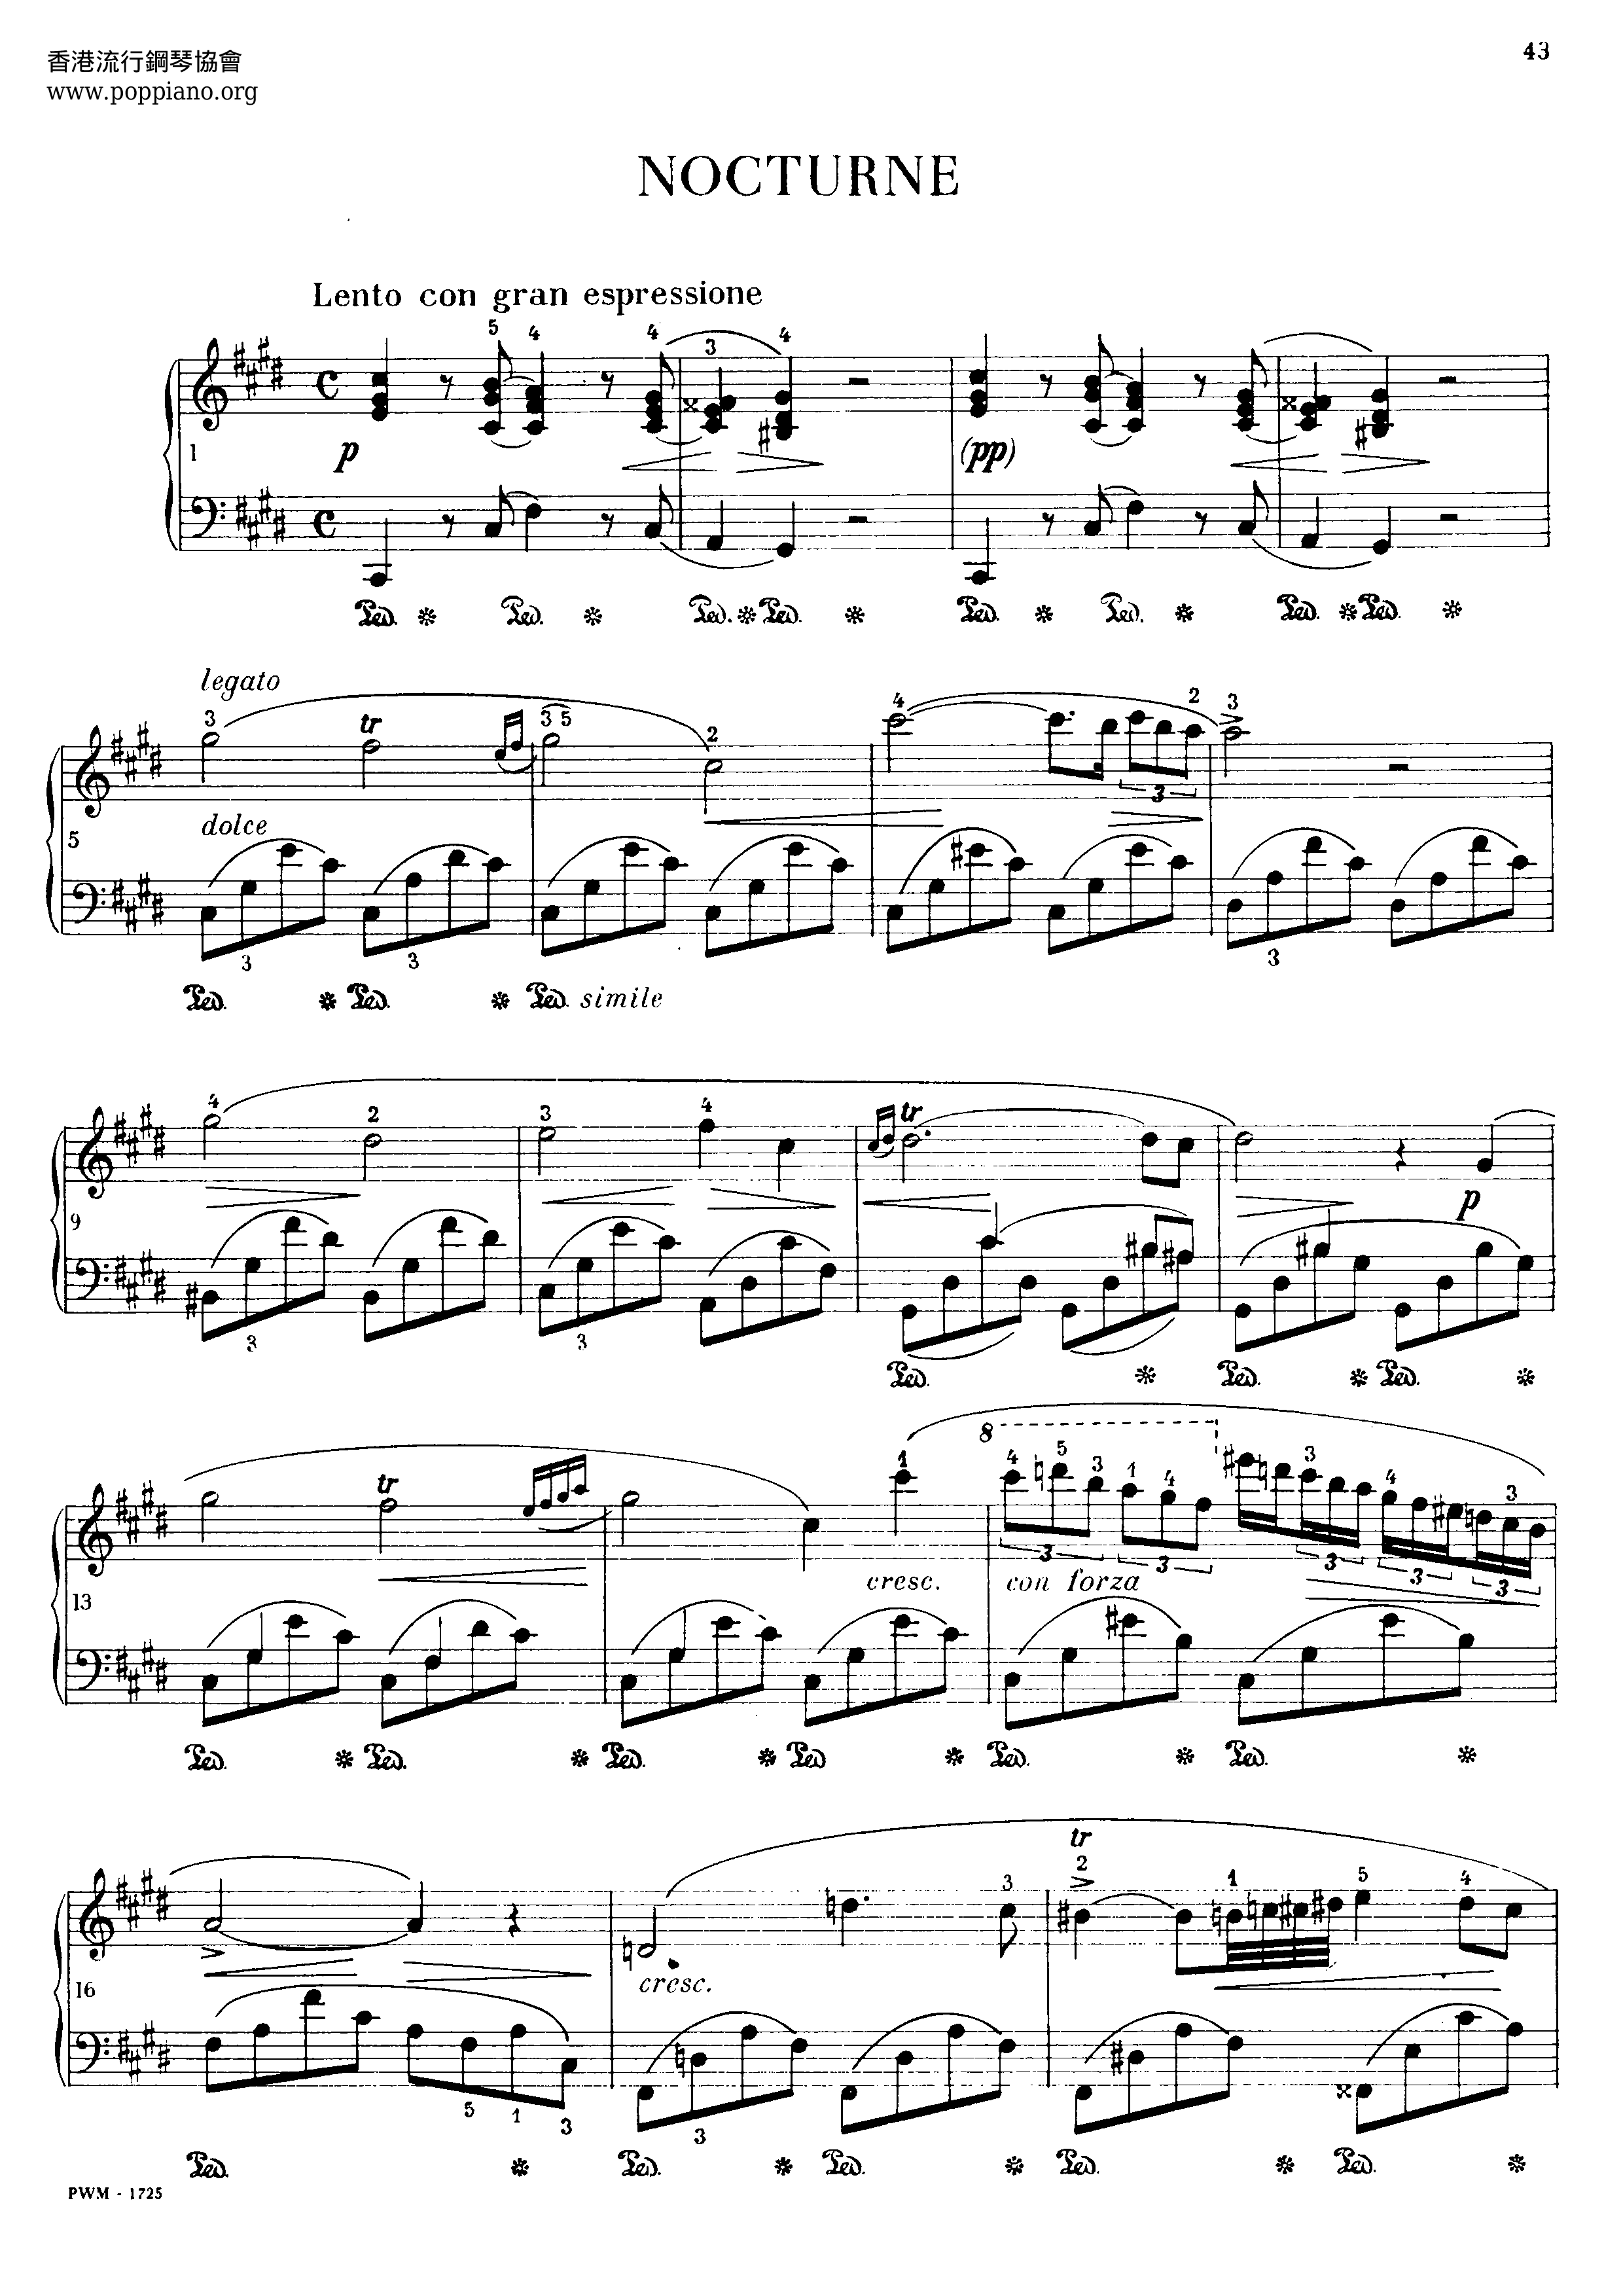 Chopin: Nocturne No. 20 in C-Sharp Minor, Op. Posth.琴譜